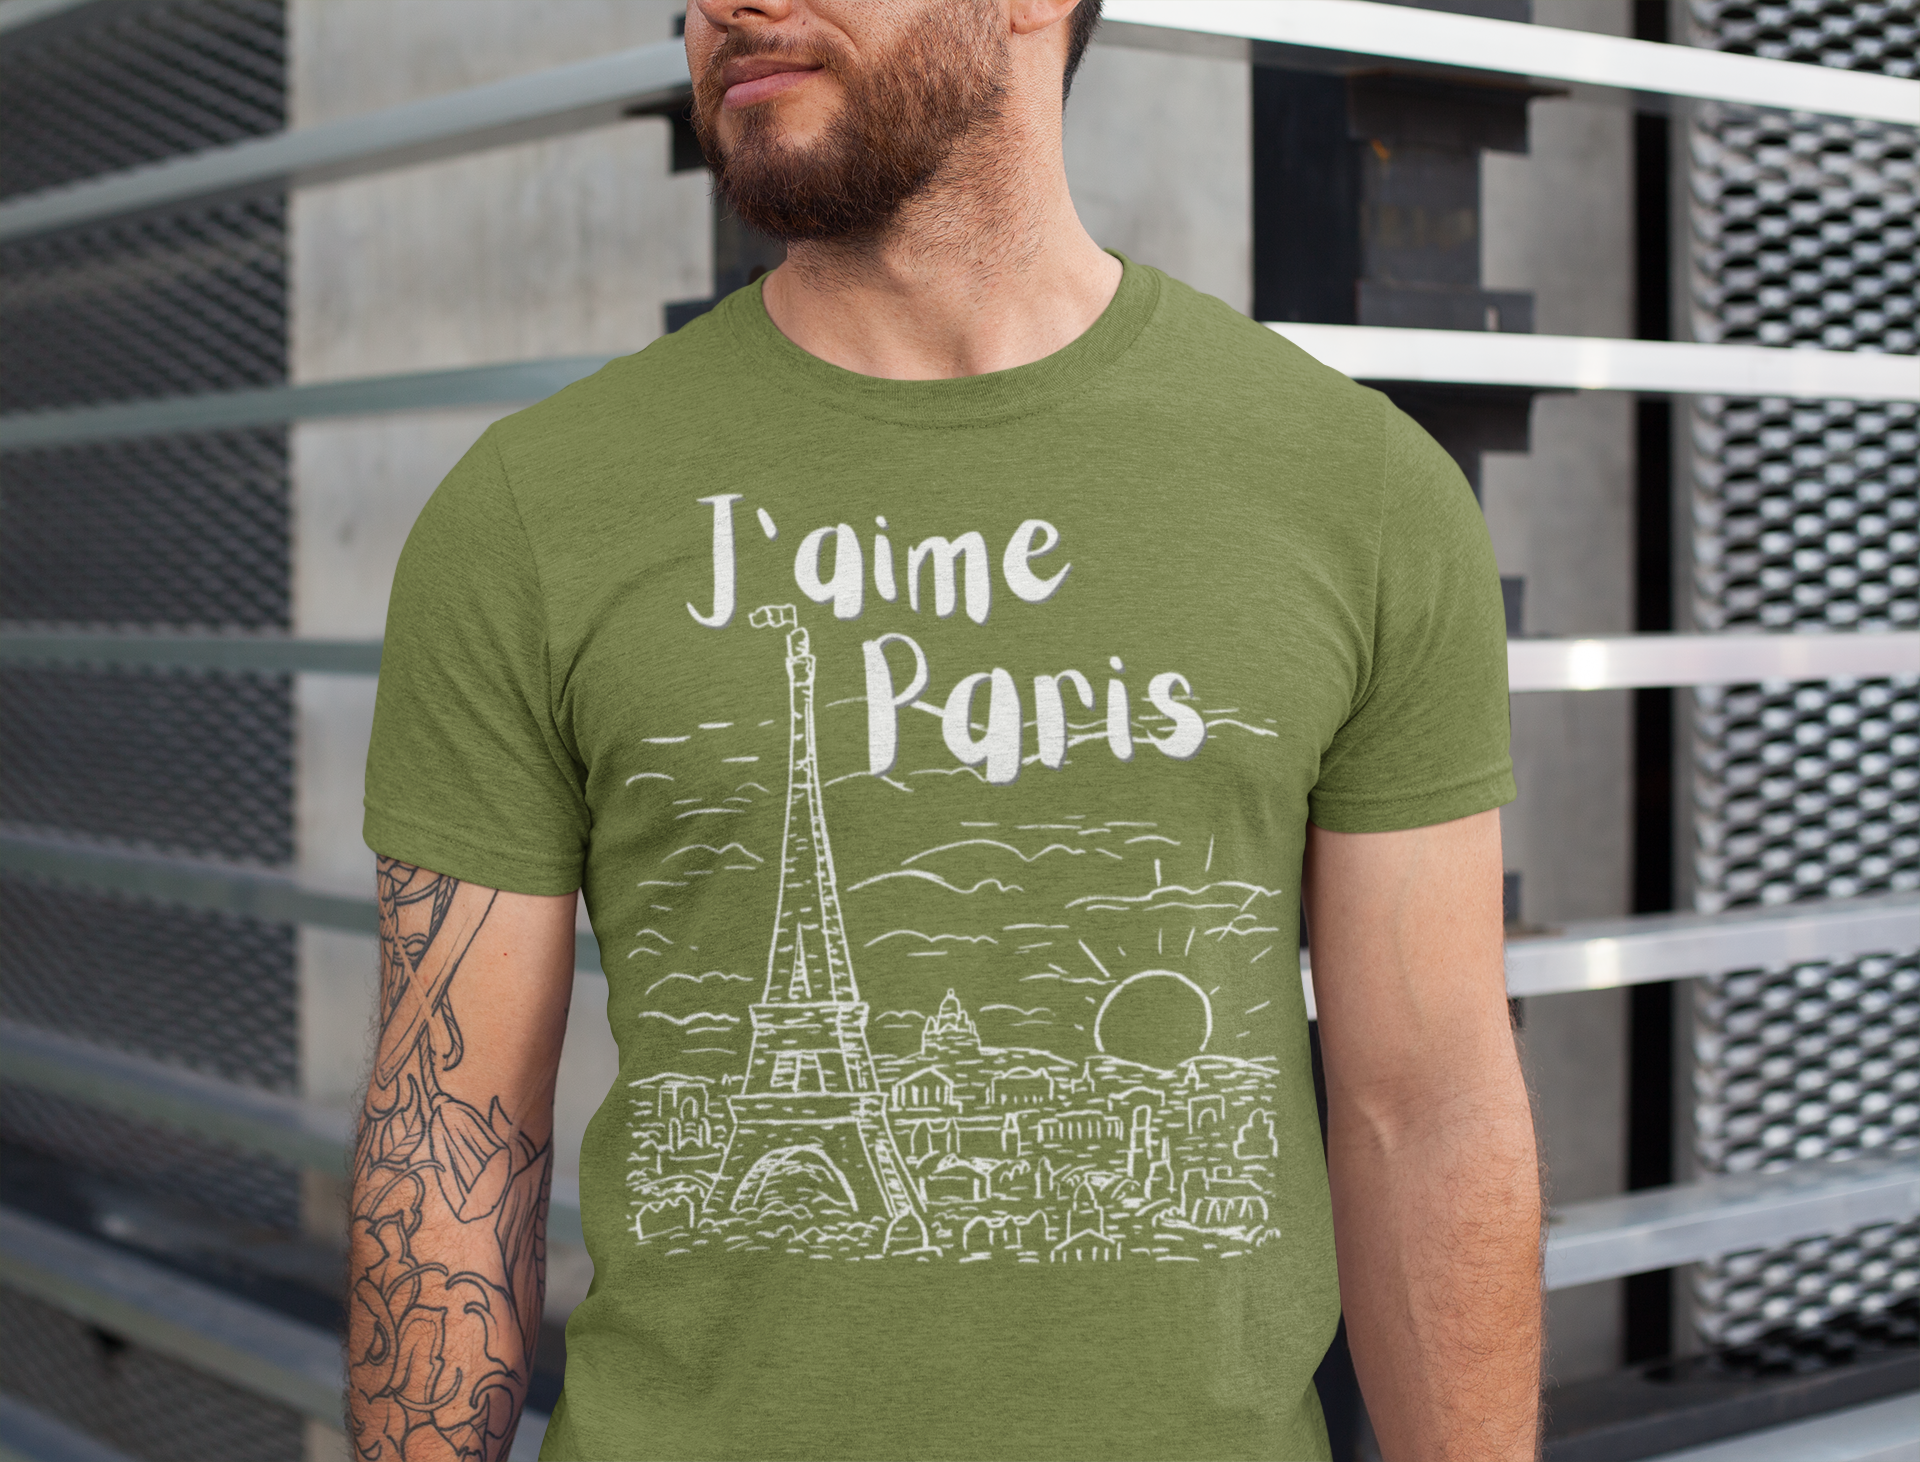 Men's Apparel and Casual Clothing - J'aime Paris T-shirt